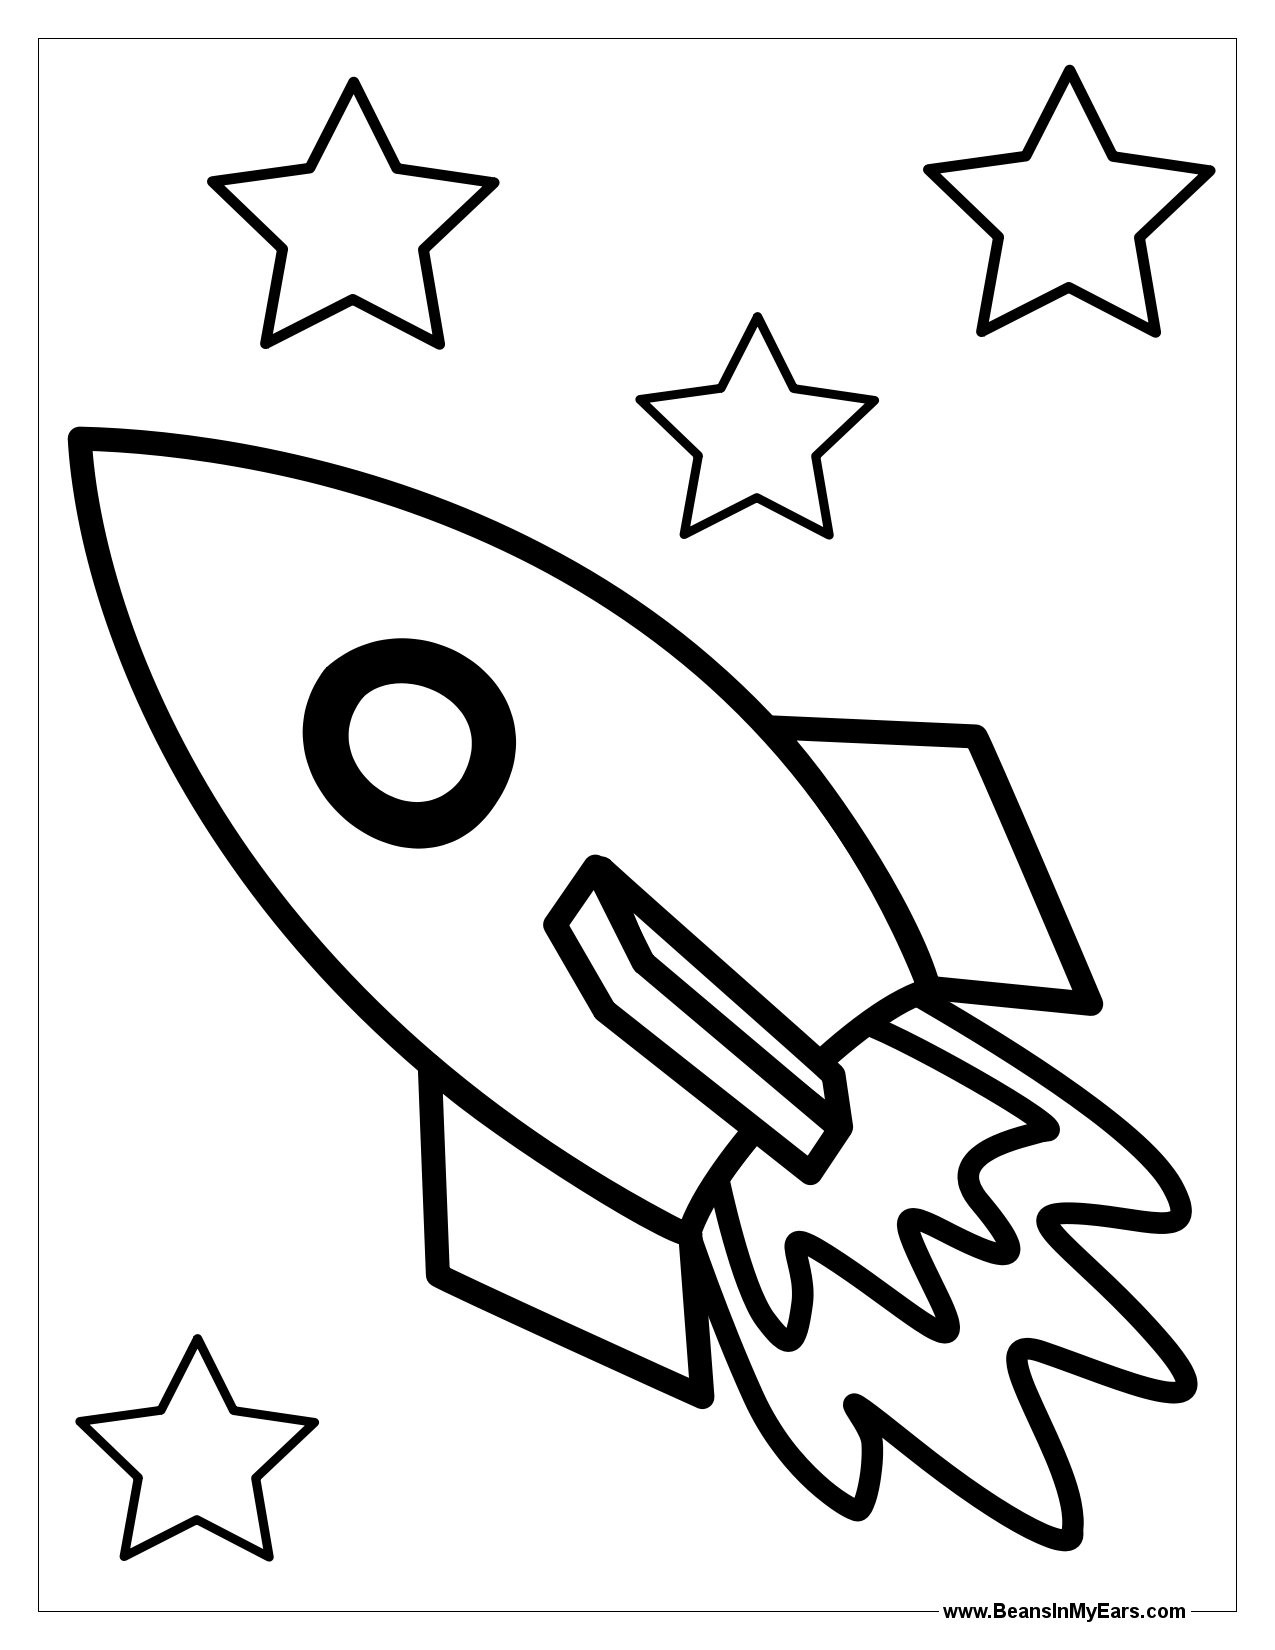 Space Rocket Coloring Page at Free printable